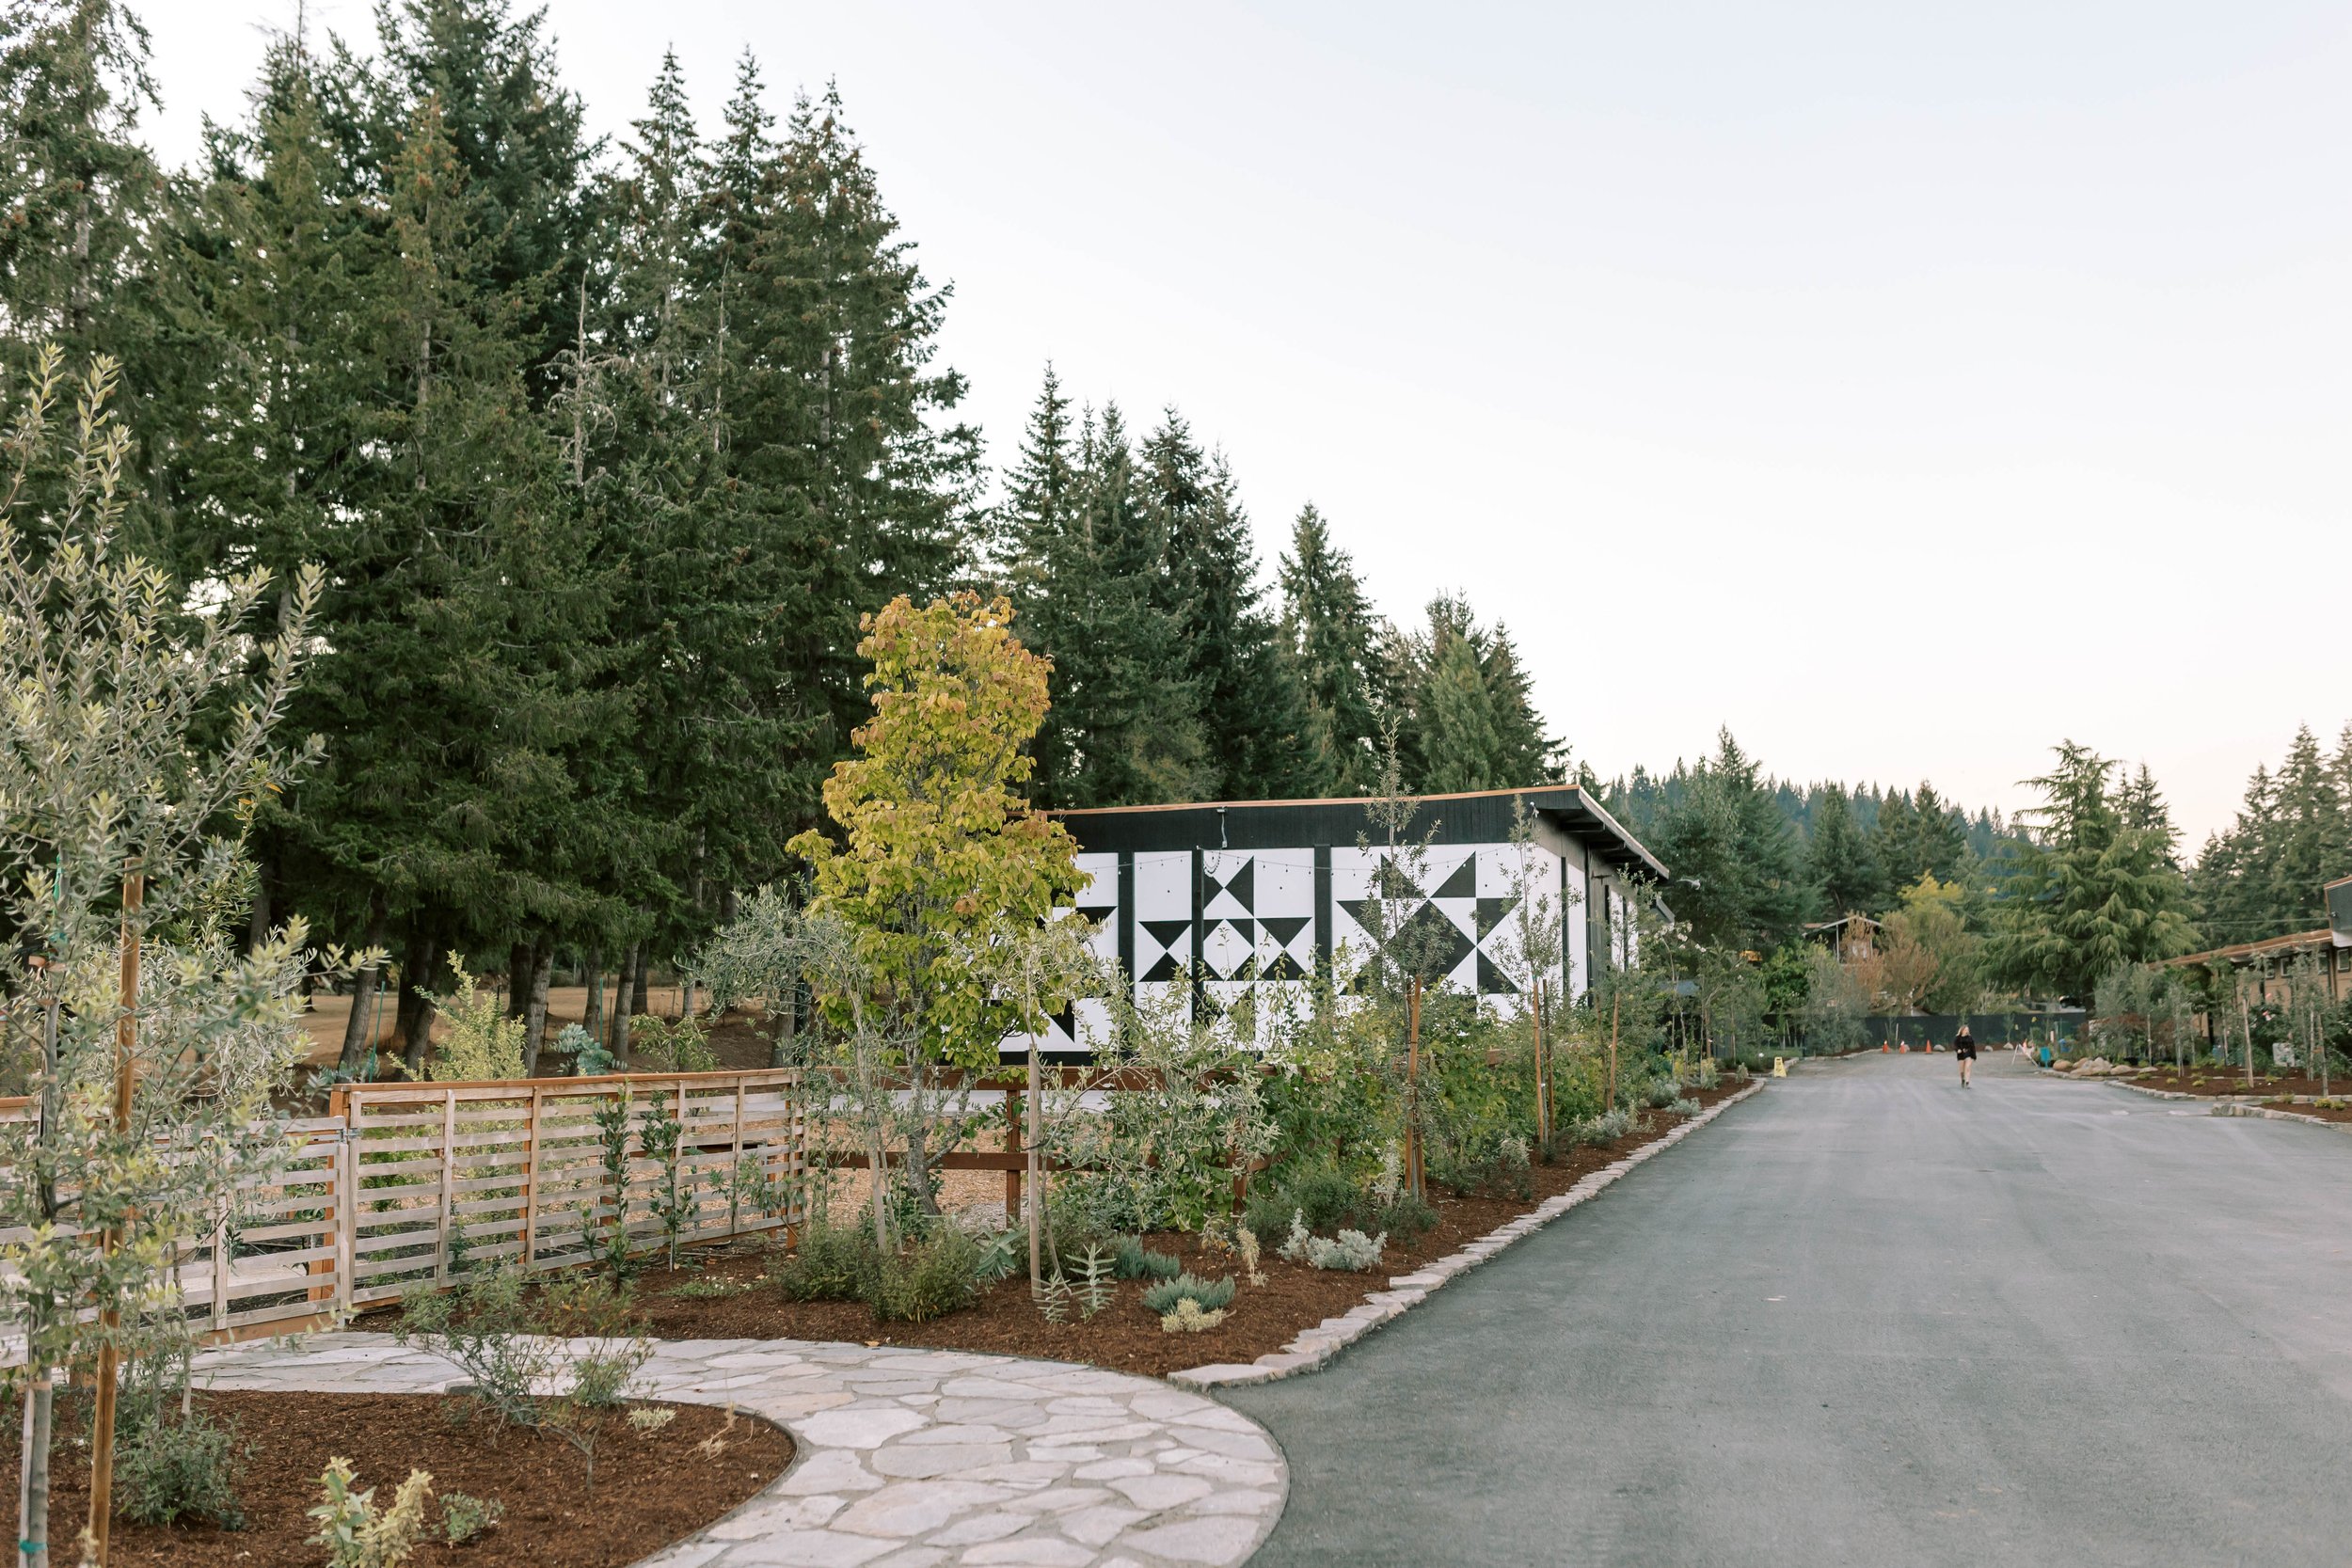  Mount Hood Center Greenhouse Oregon Wedding Venue, Boho chic, modern 